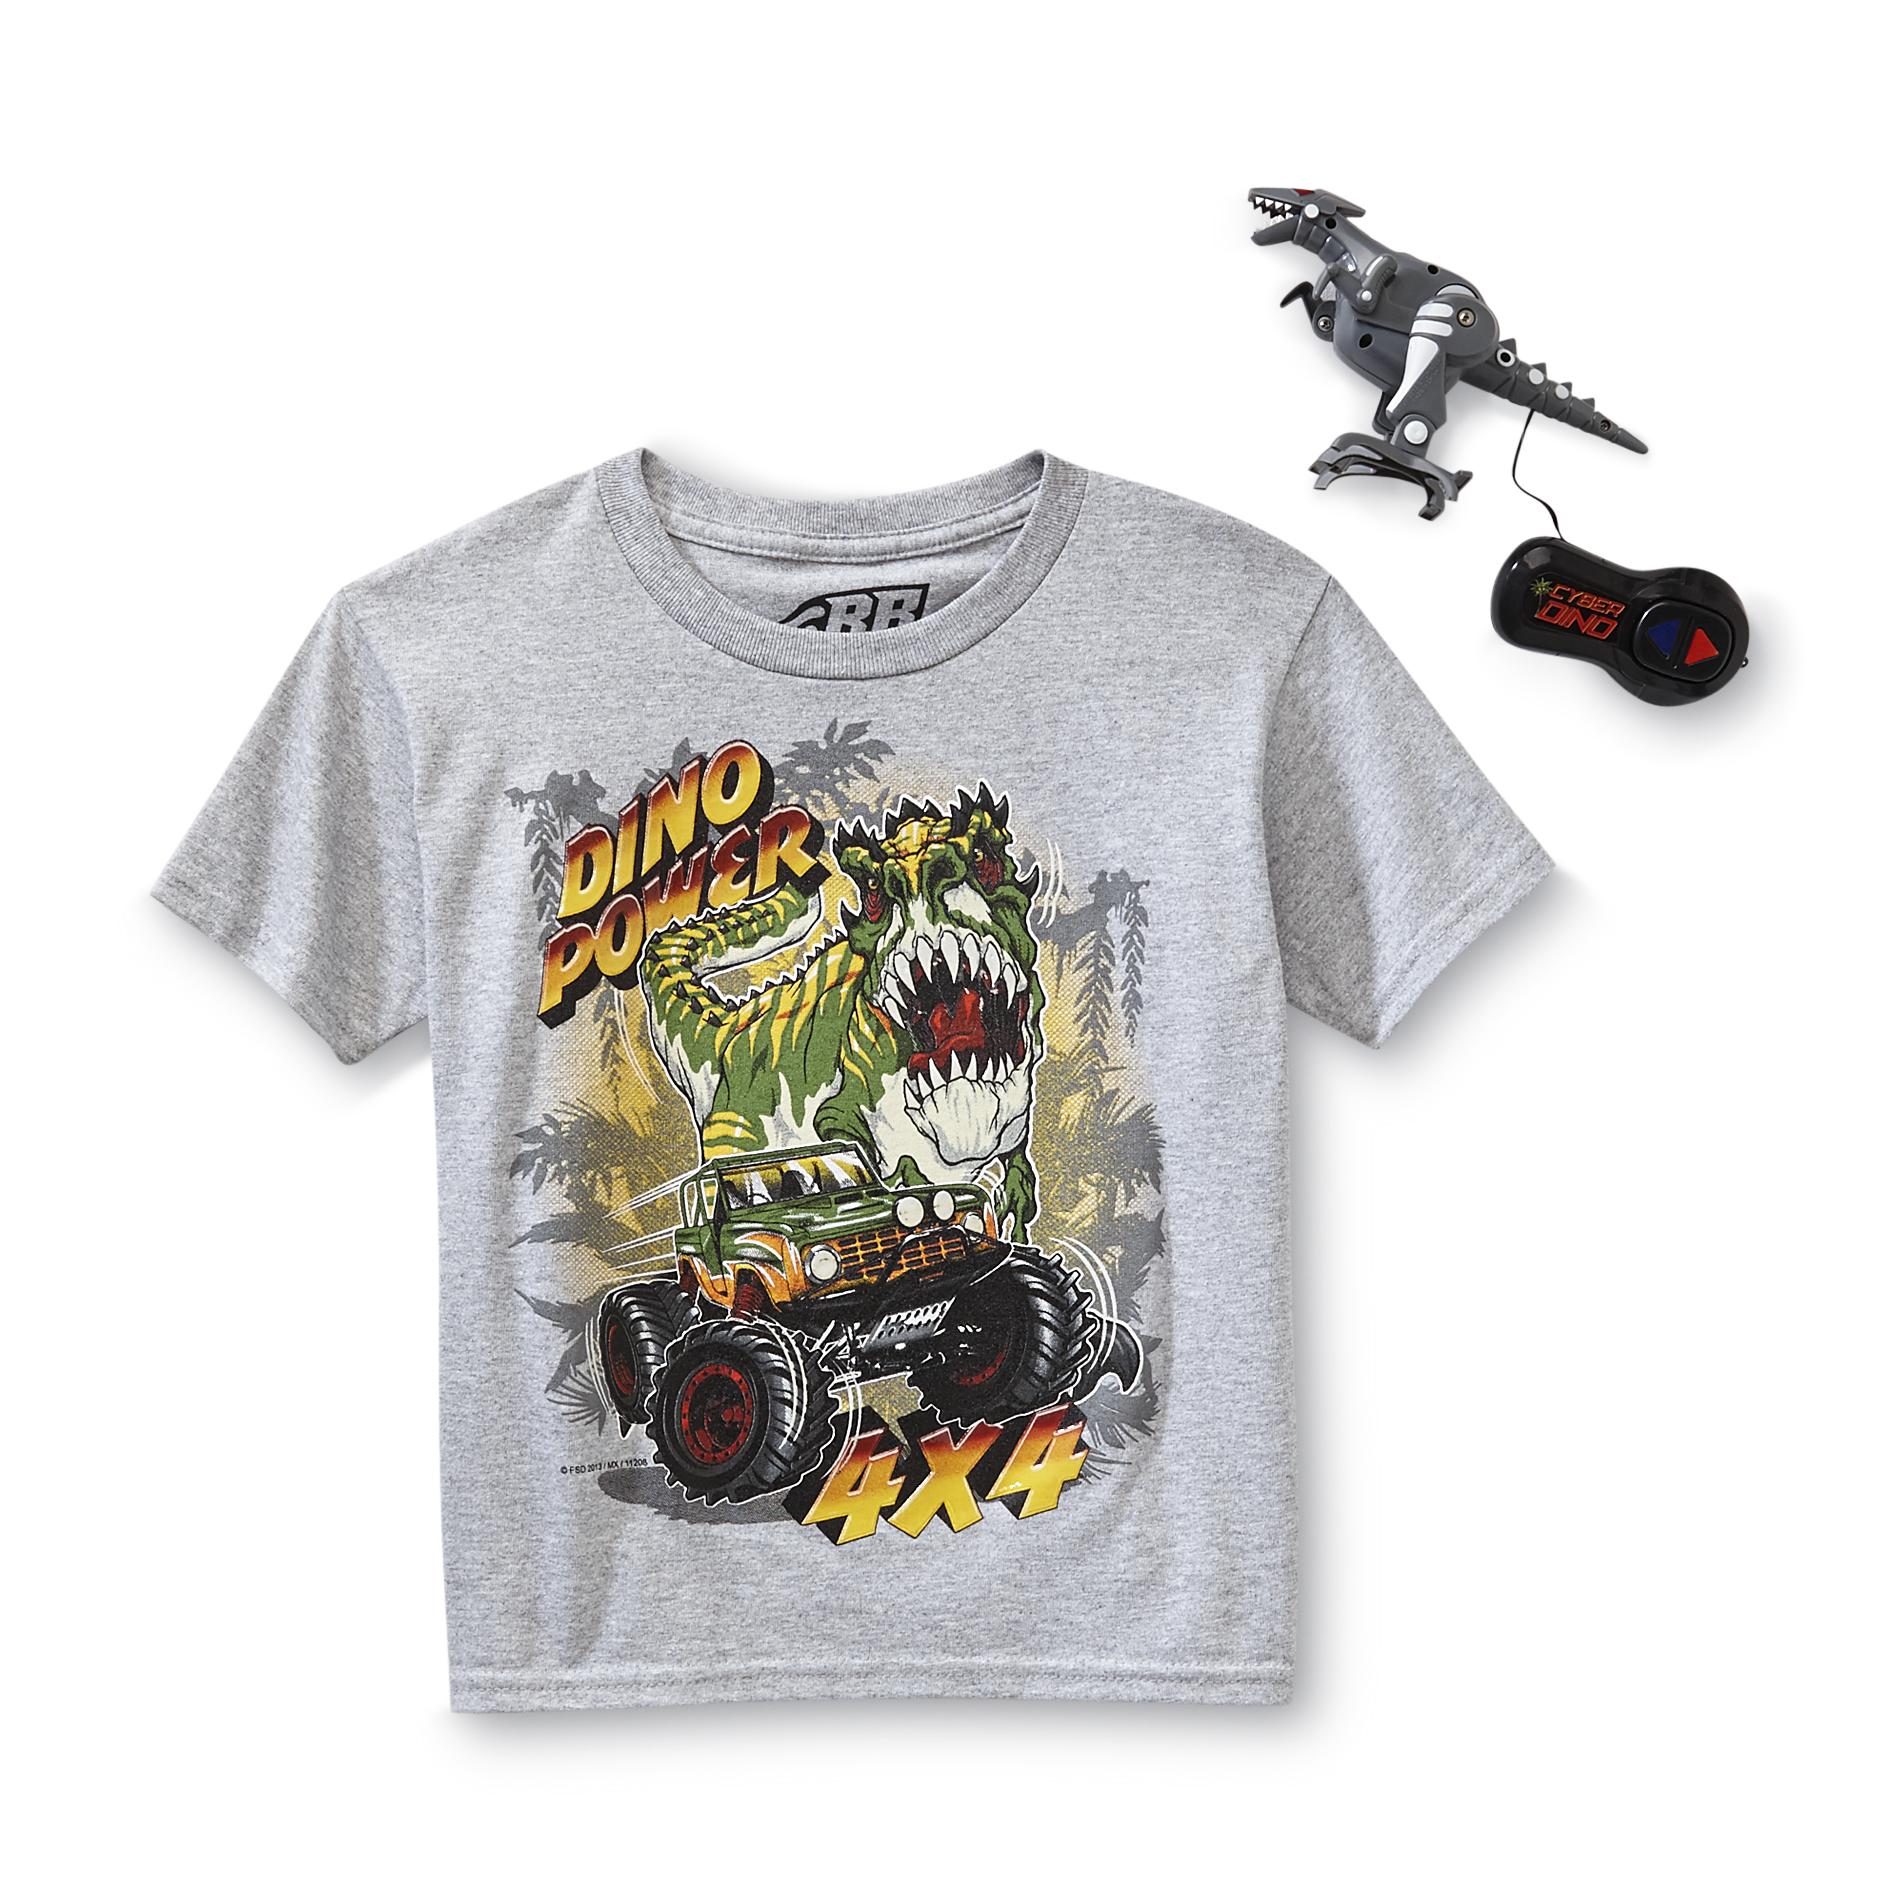 Rudeboyz Boy's Graphic T-Shirt & Remote Control Toy - Dinosaur